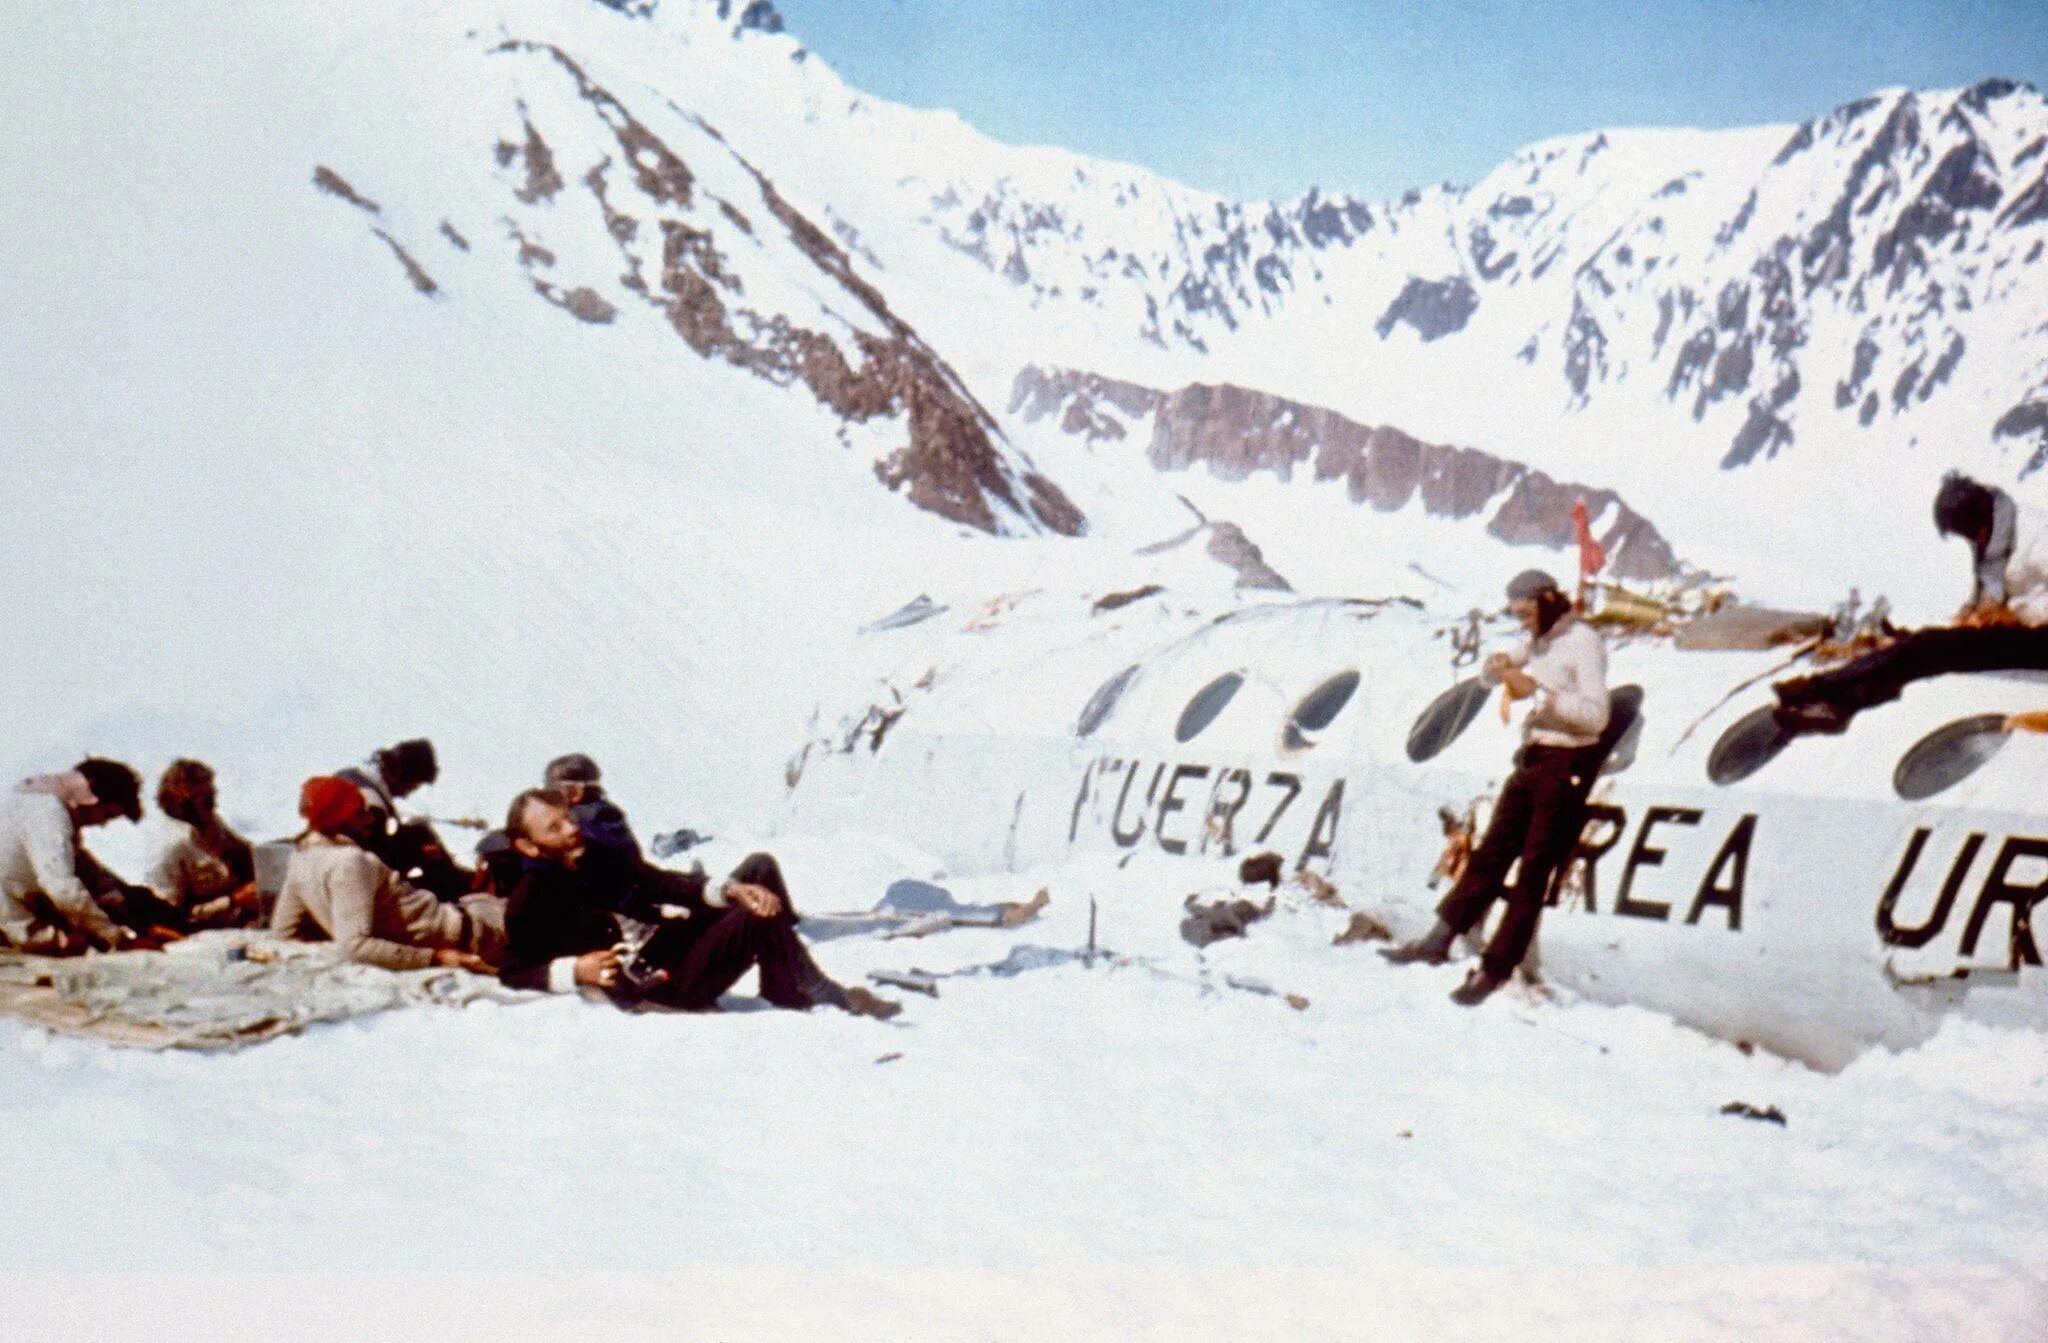 Разбившиеся в андах. Самолет разбившийся в Андах в 1972. 13 Октября 1972 авиакатастрофа в Андах.